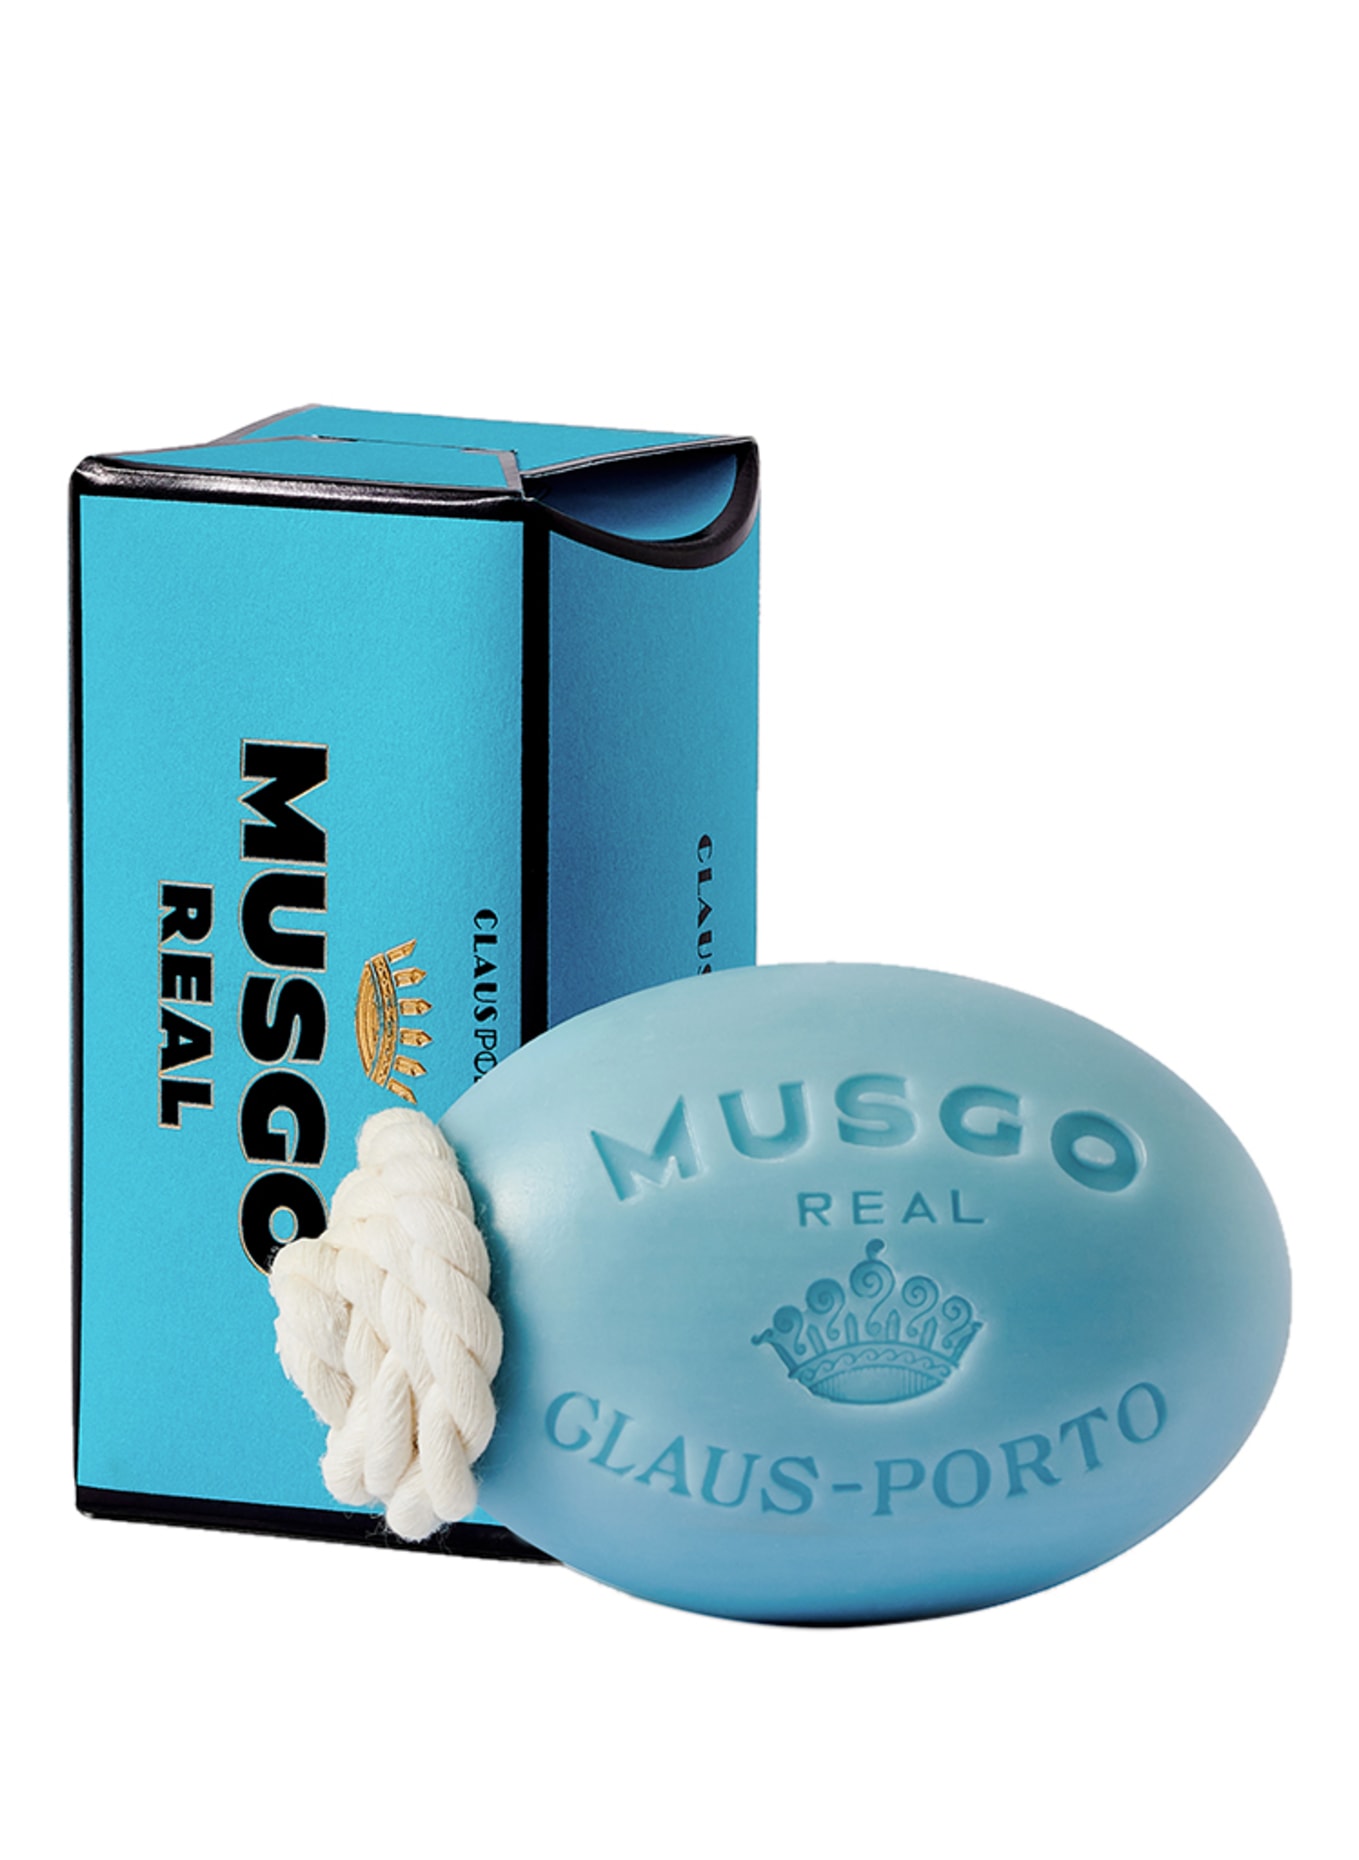 CLAUS PORTO MUSGO REAL ALTO MAR SOAP ON A ROPE (Bild 1)